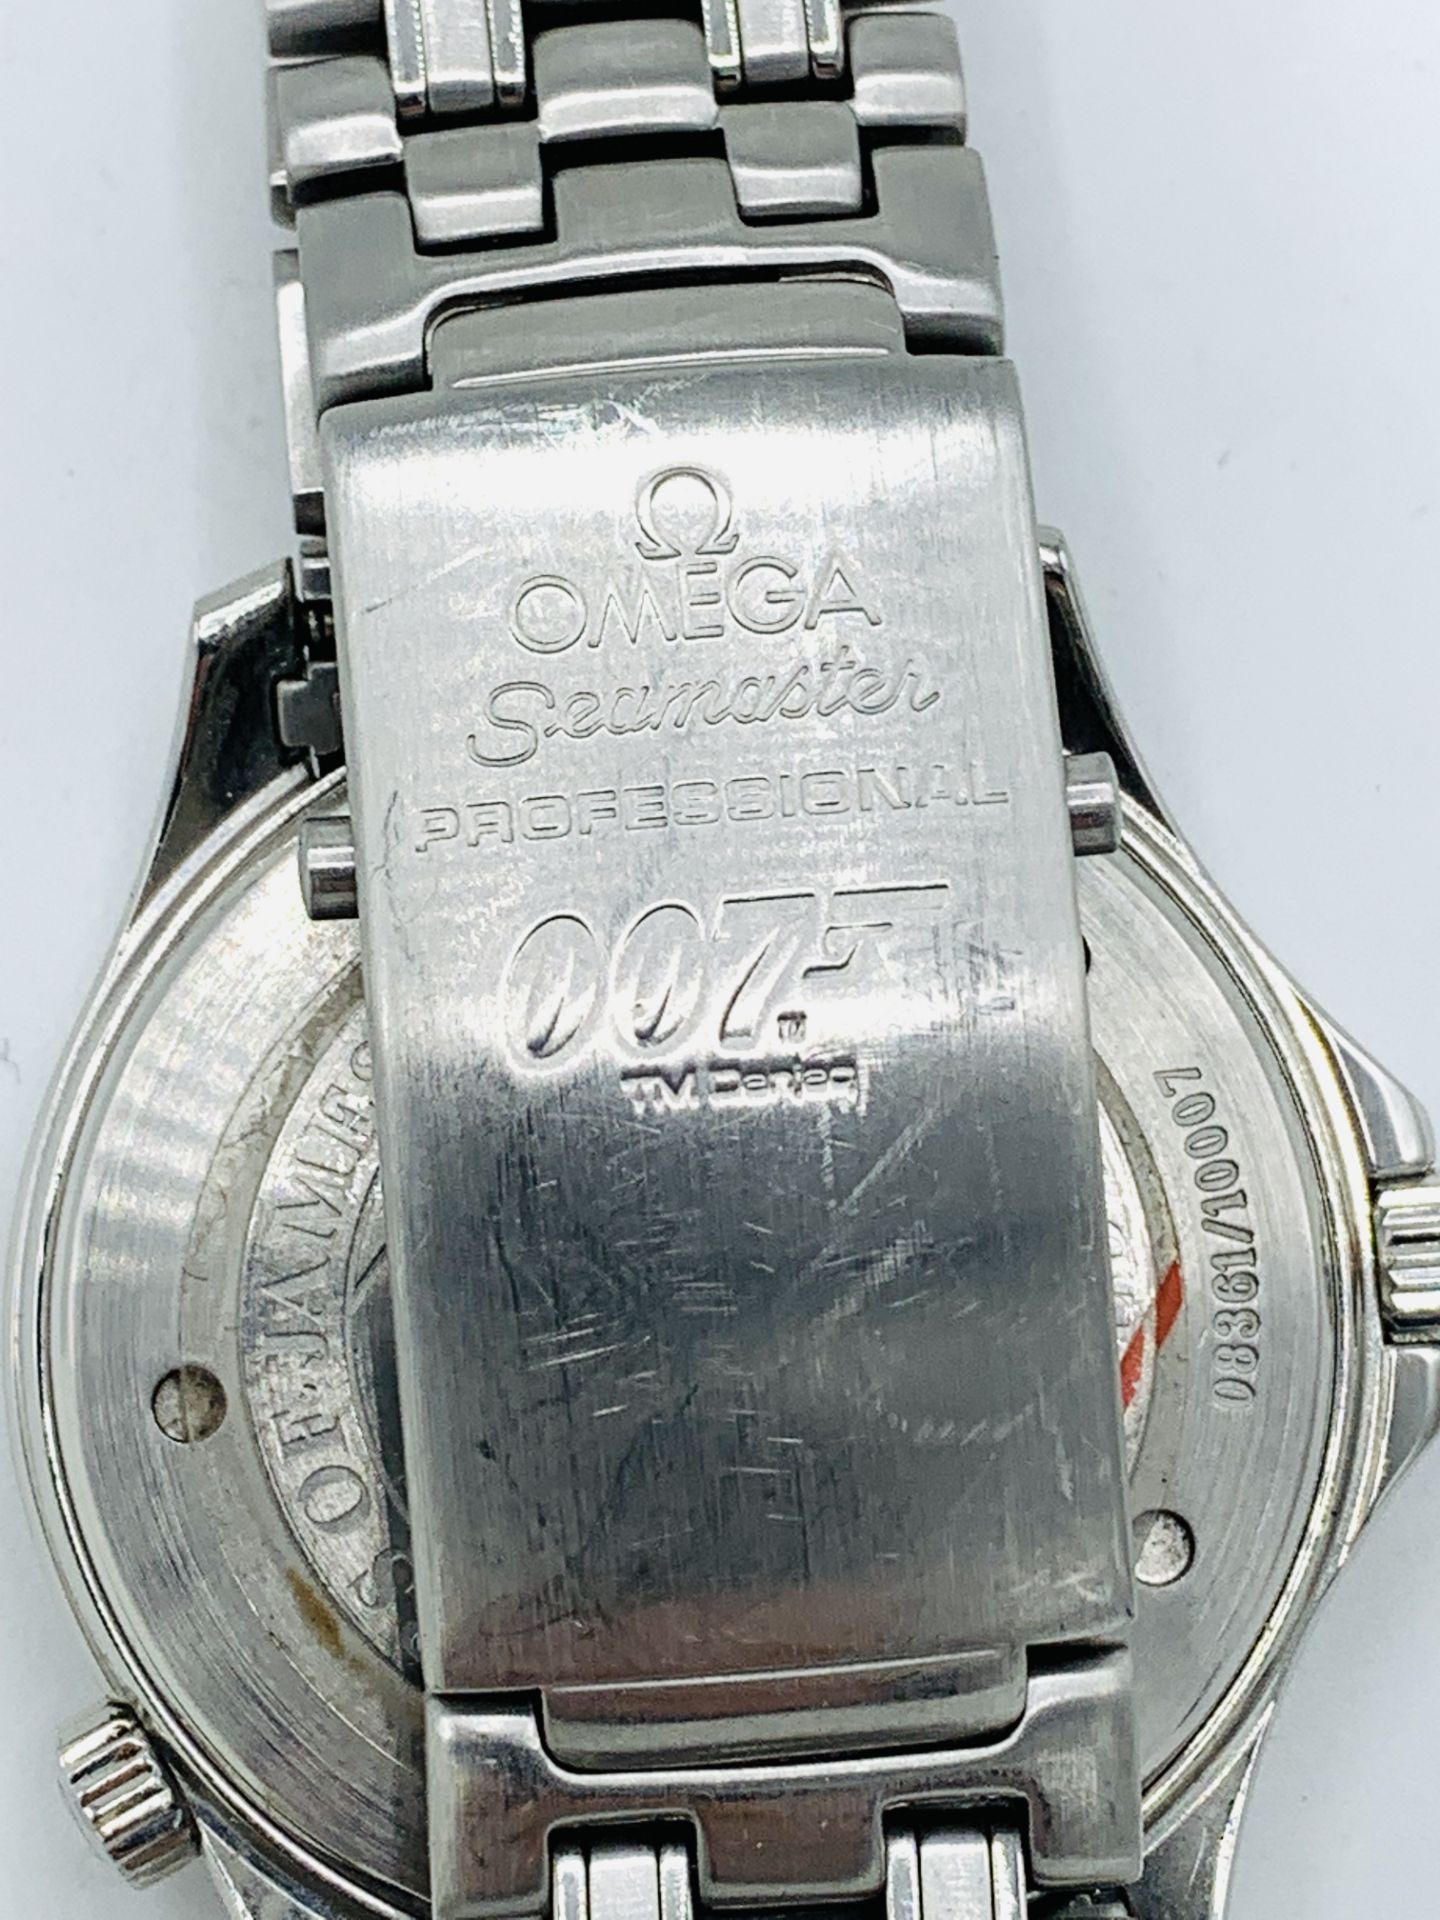 Omega Seamaster Professional Chronometer "40 years of James Bond" Limited Series - Image 4 of 10